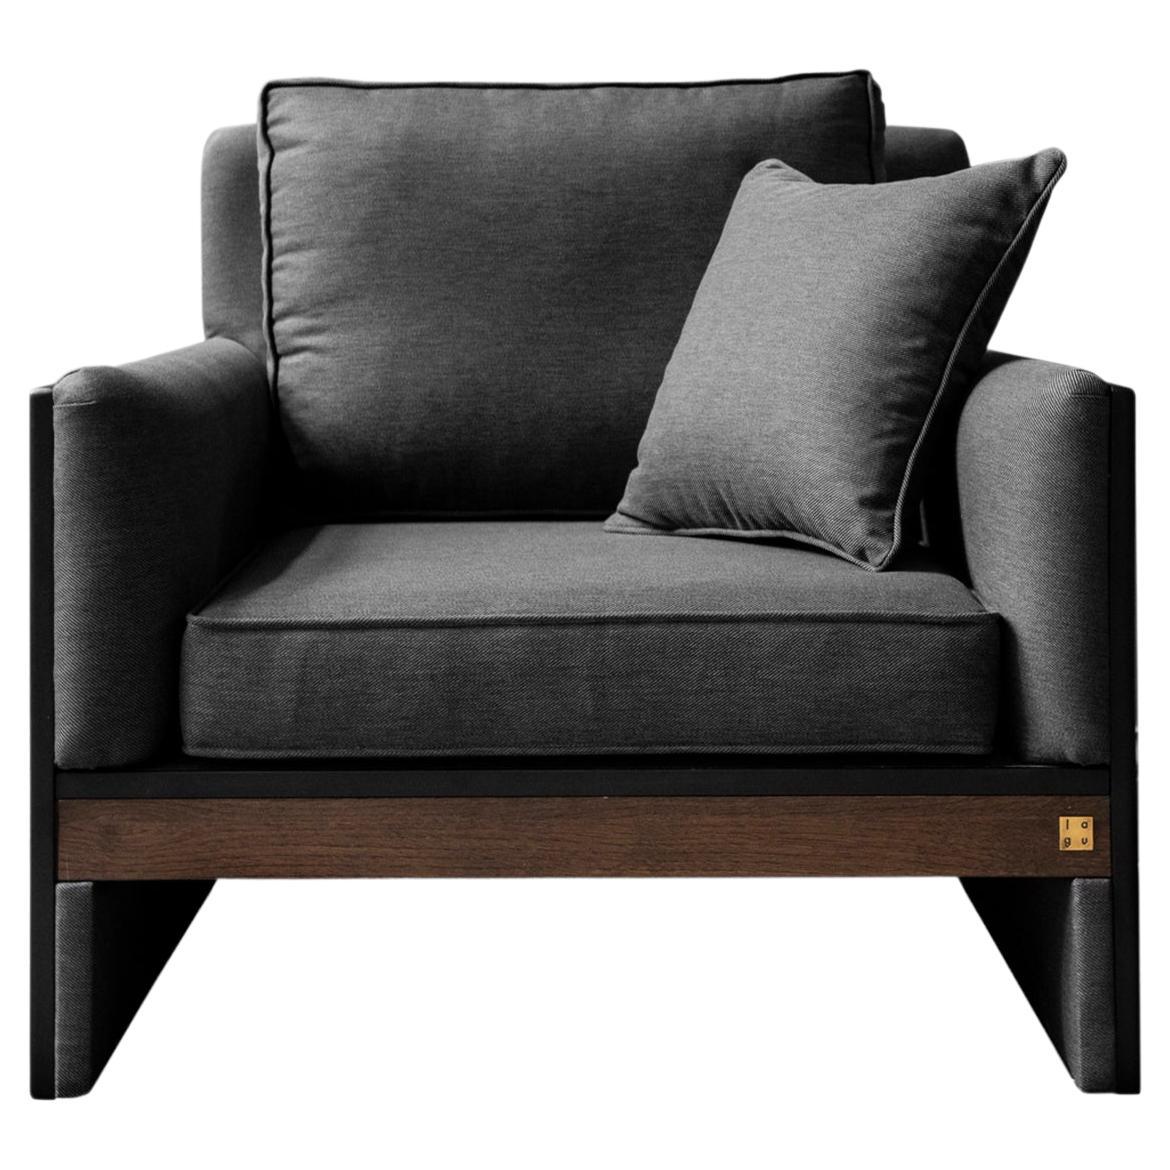 Berühmter detaillierter Sessel aus schwarzem Metall